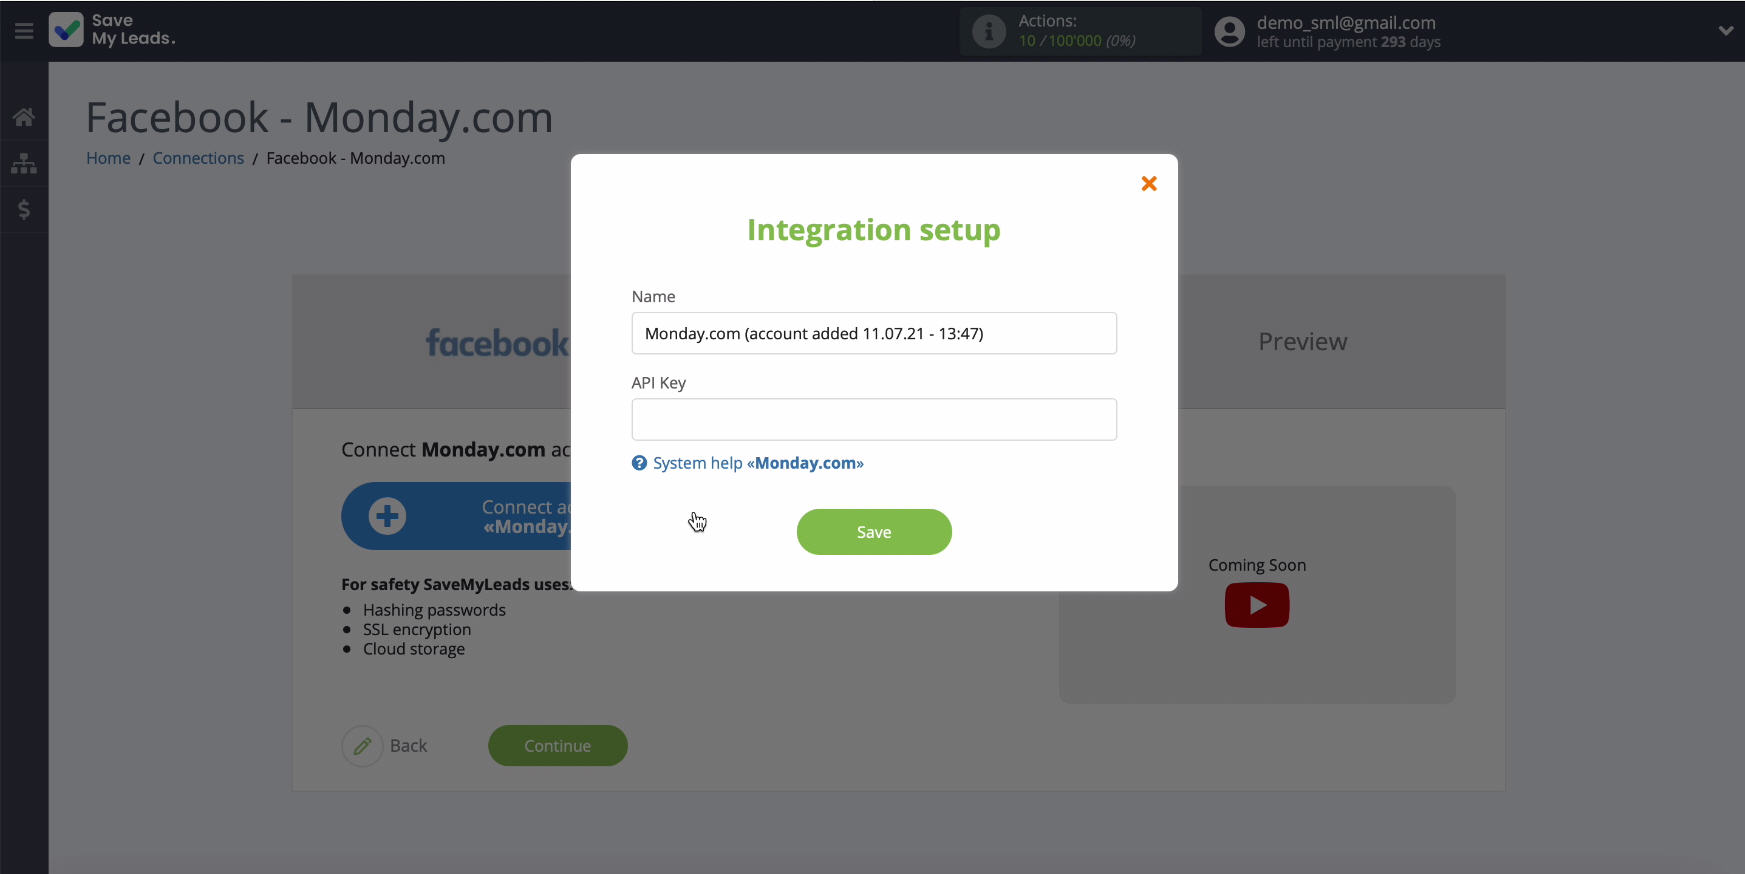 Facebook and Monday.com integration | Window input API key